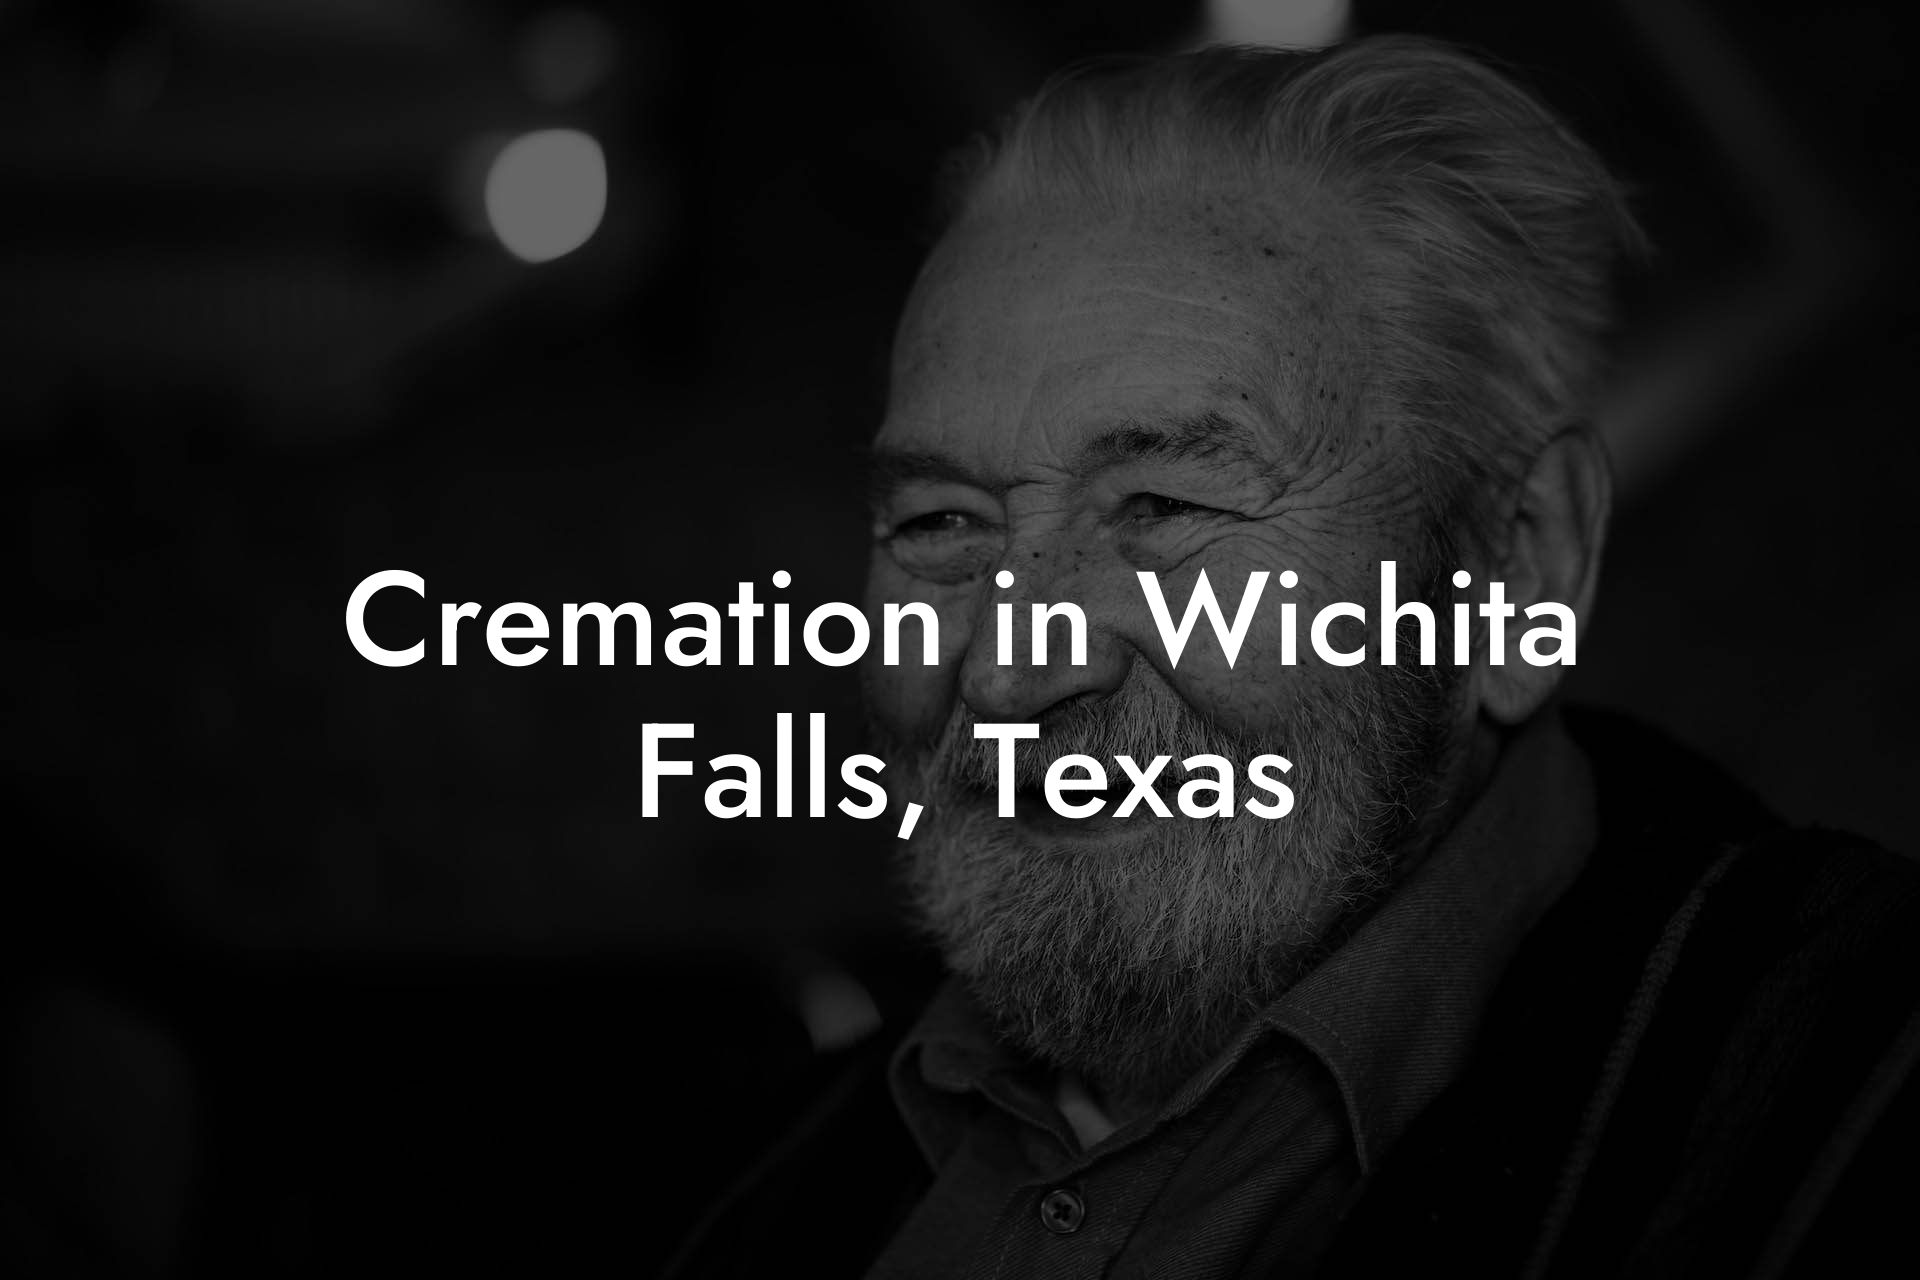 Cremation in Wichita Falls, Texas